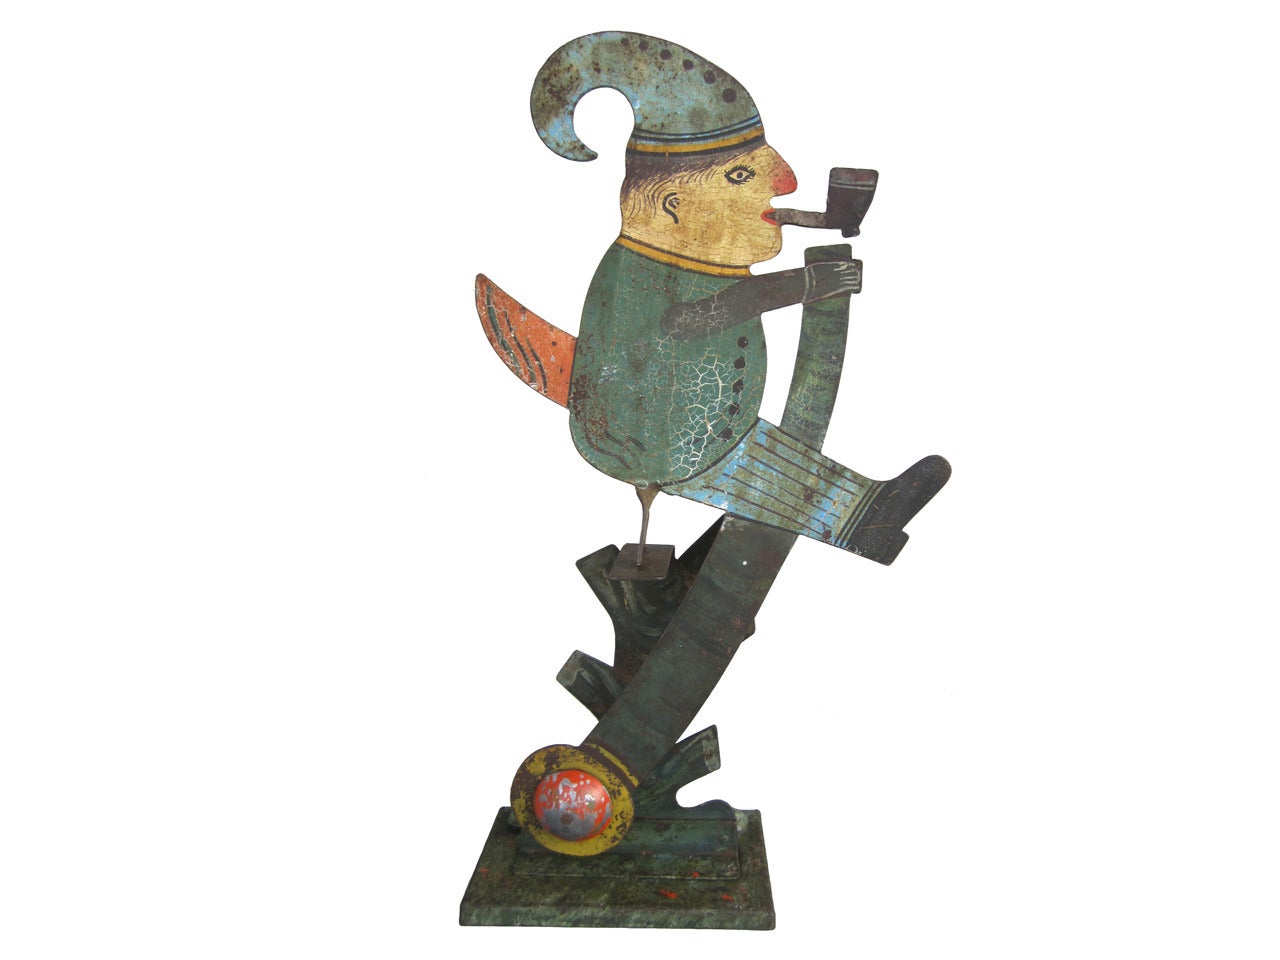 Circa 1920 Gnome Toy